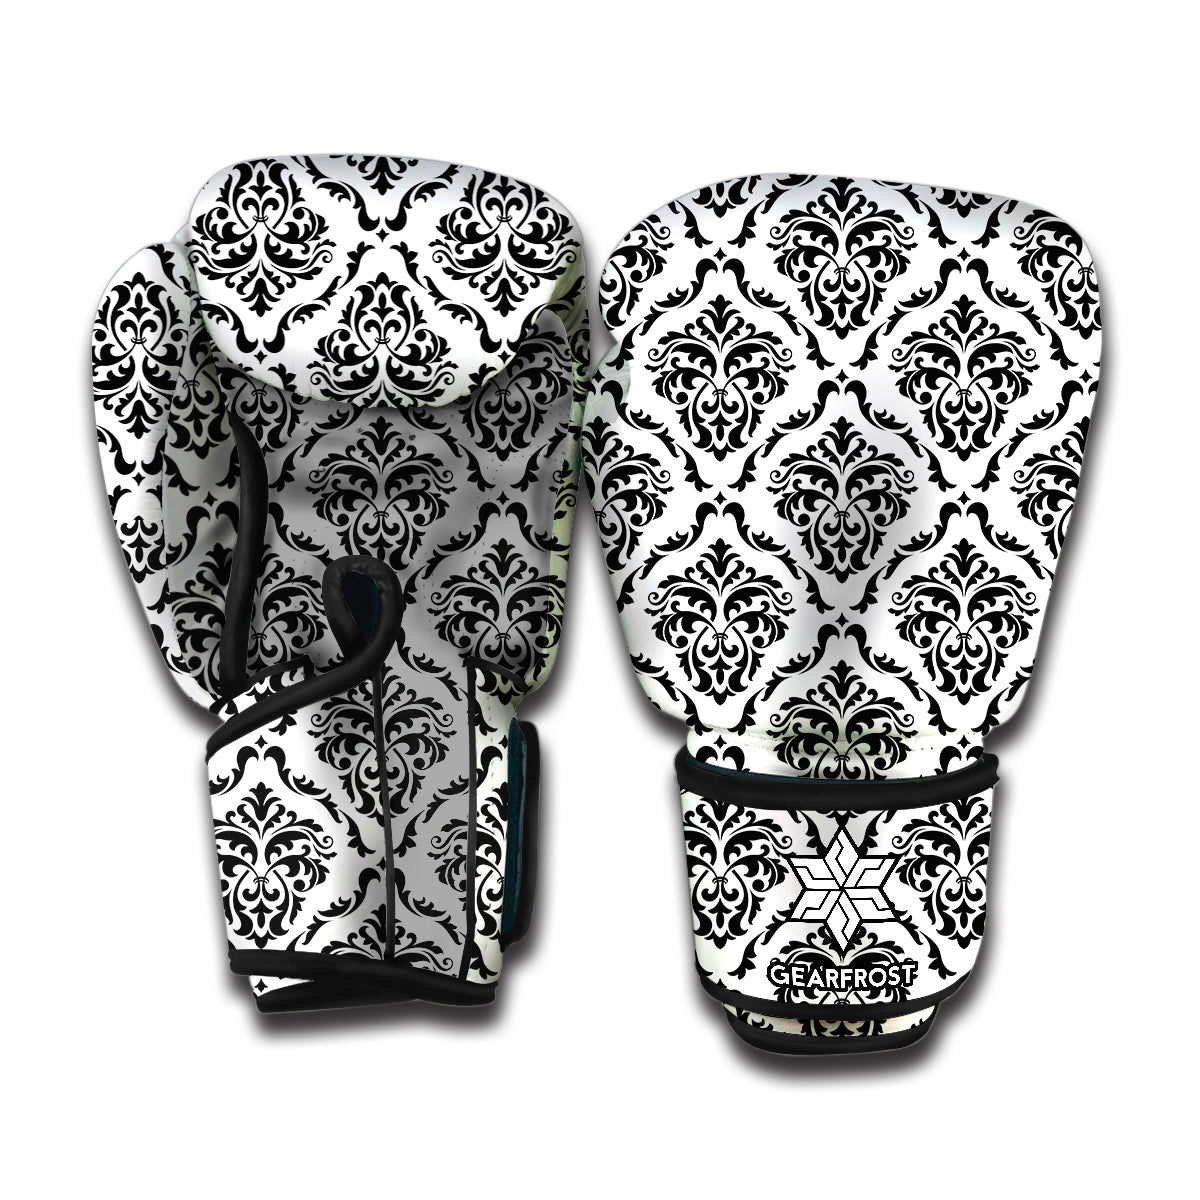 White And Black Damask Pattern Print Boxing Gloves